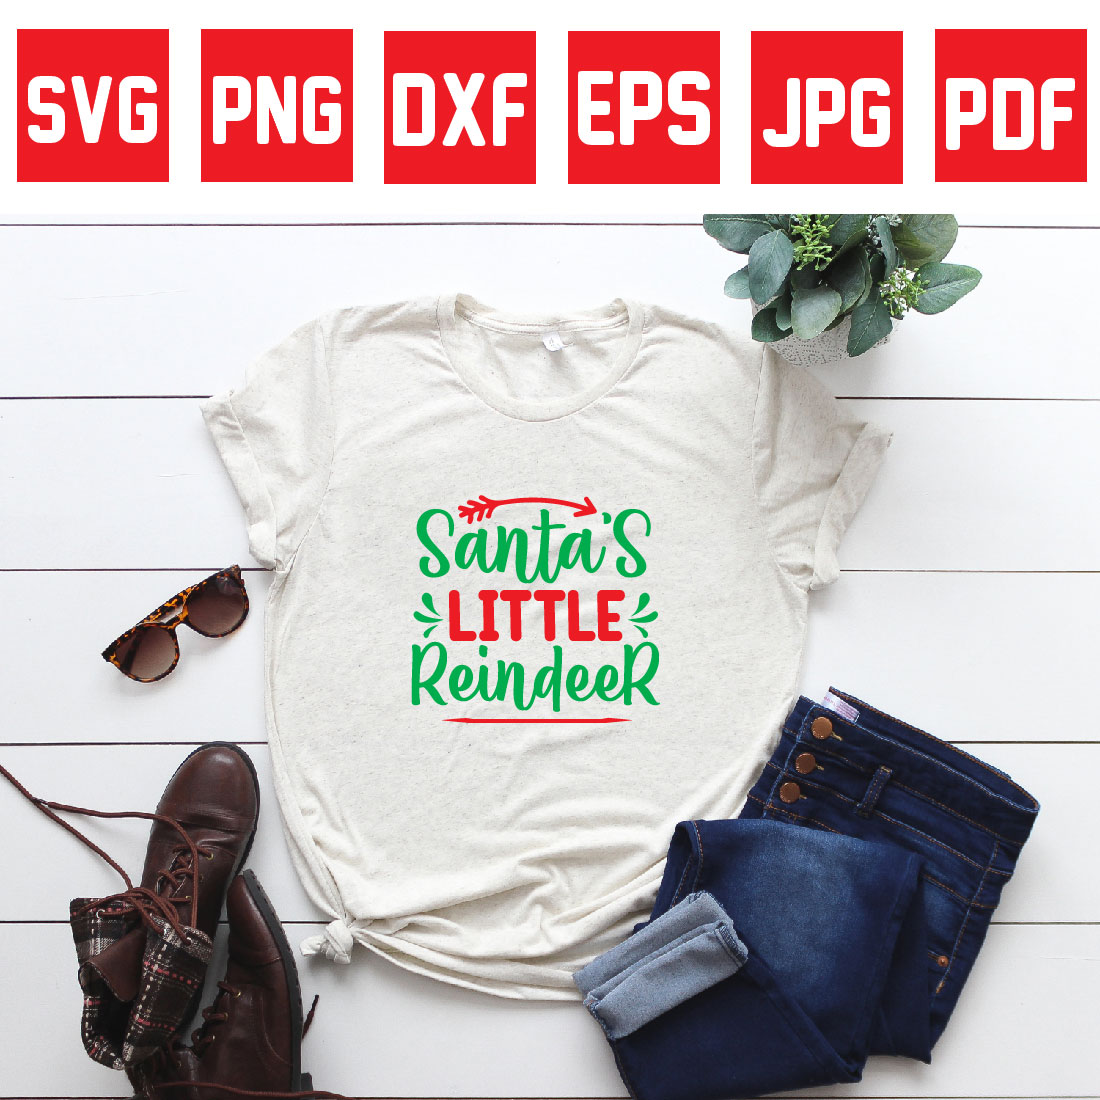 Santa’s Little Reindeer preview image.